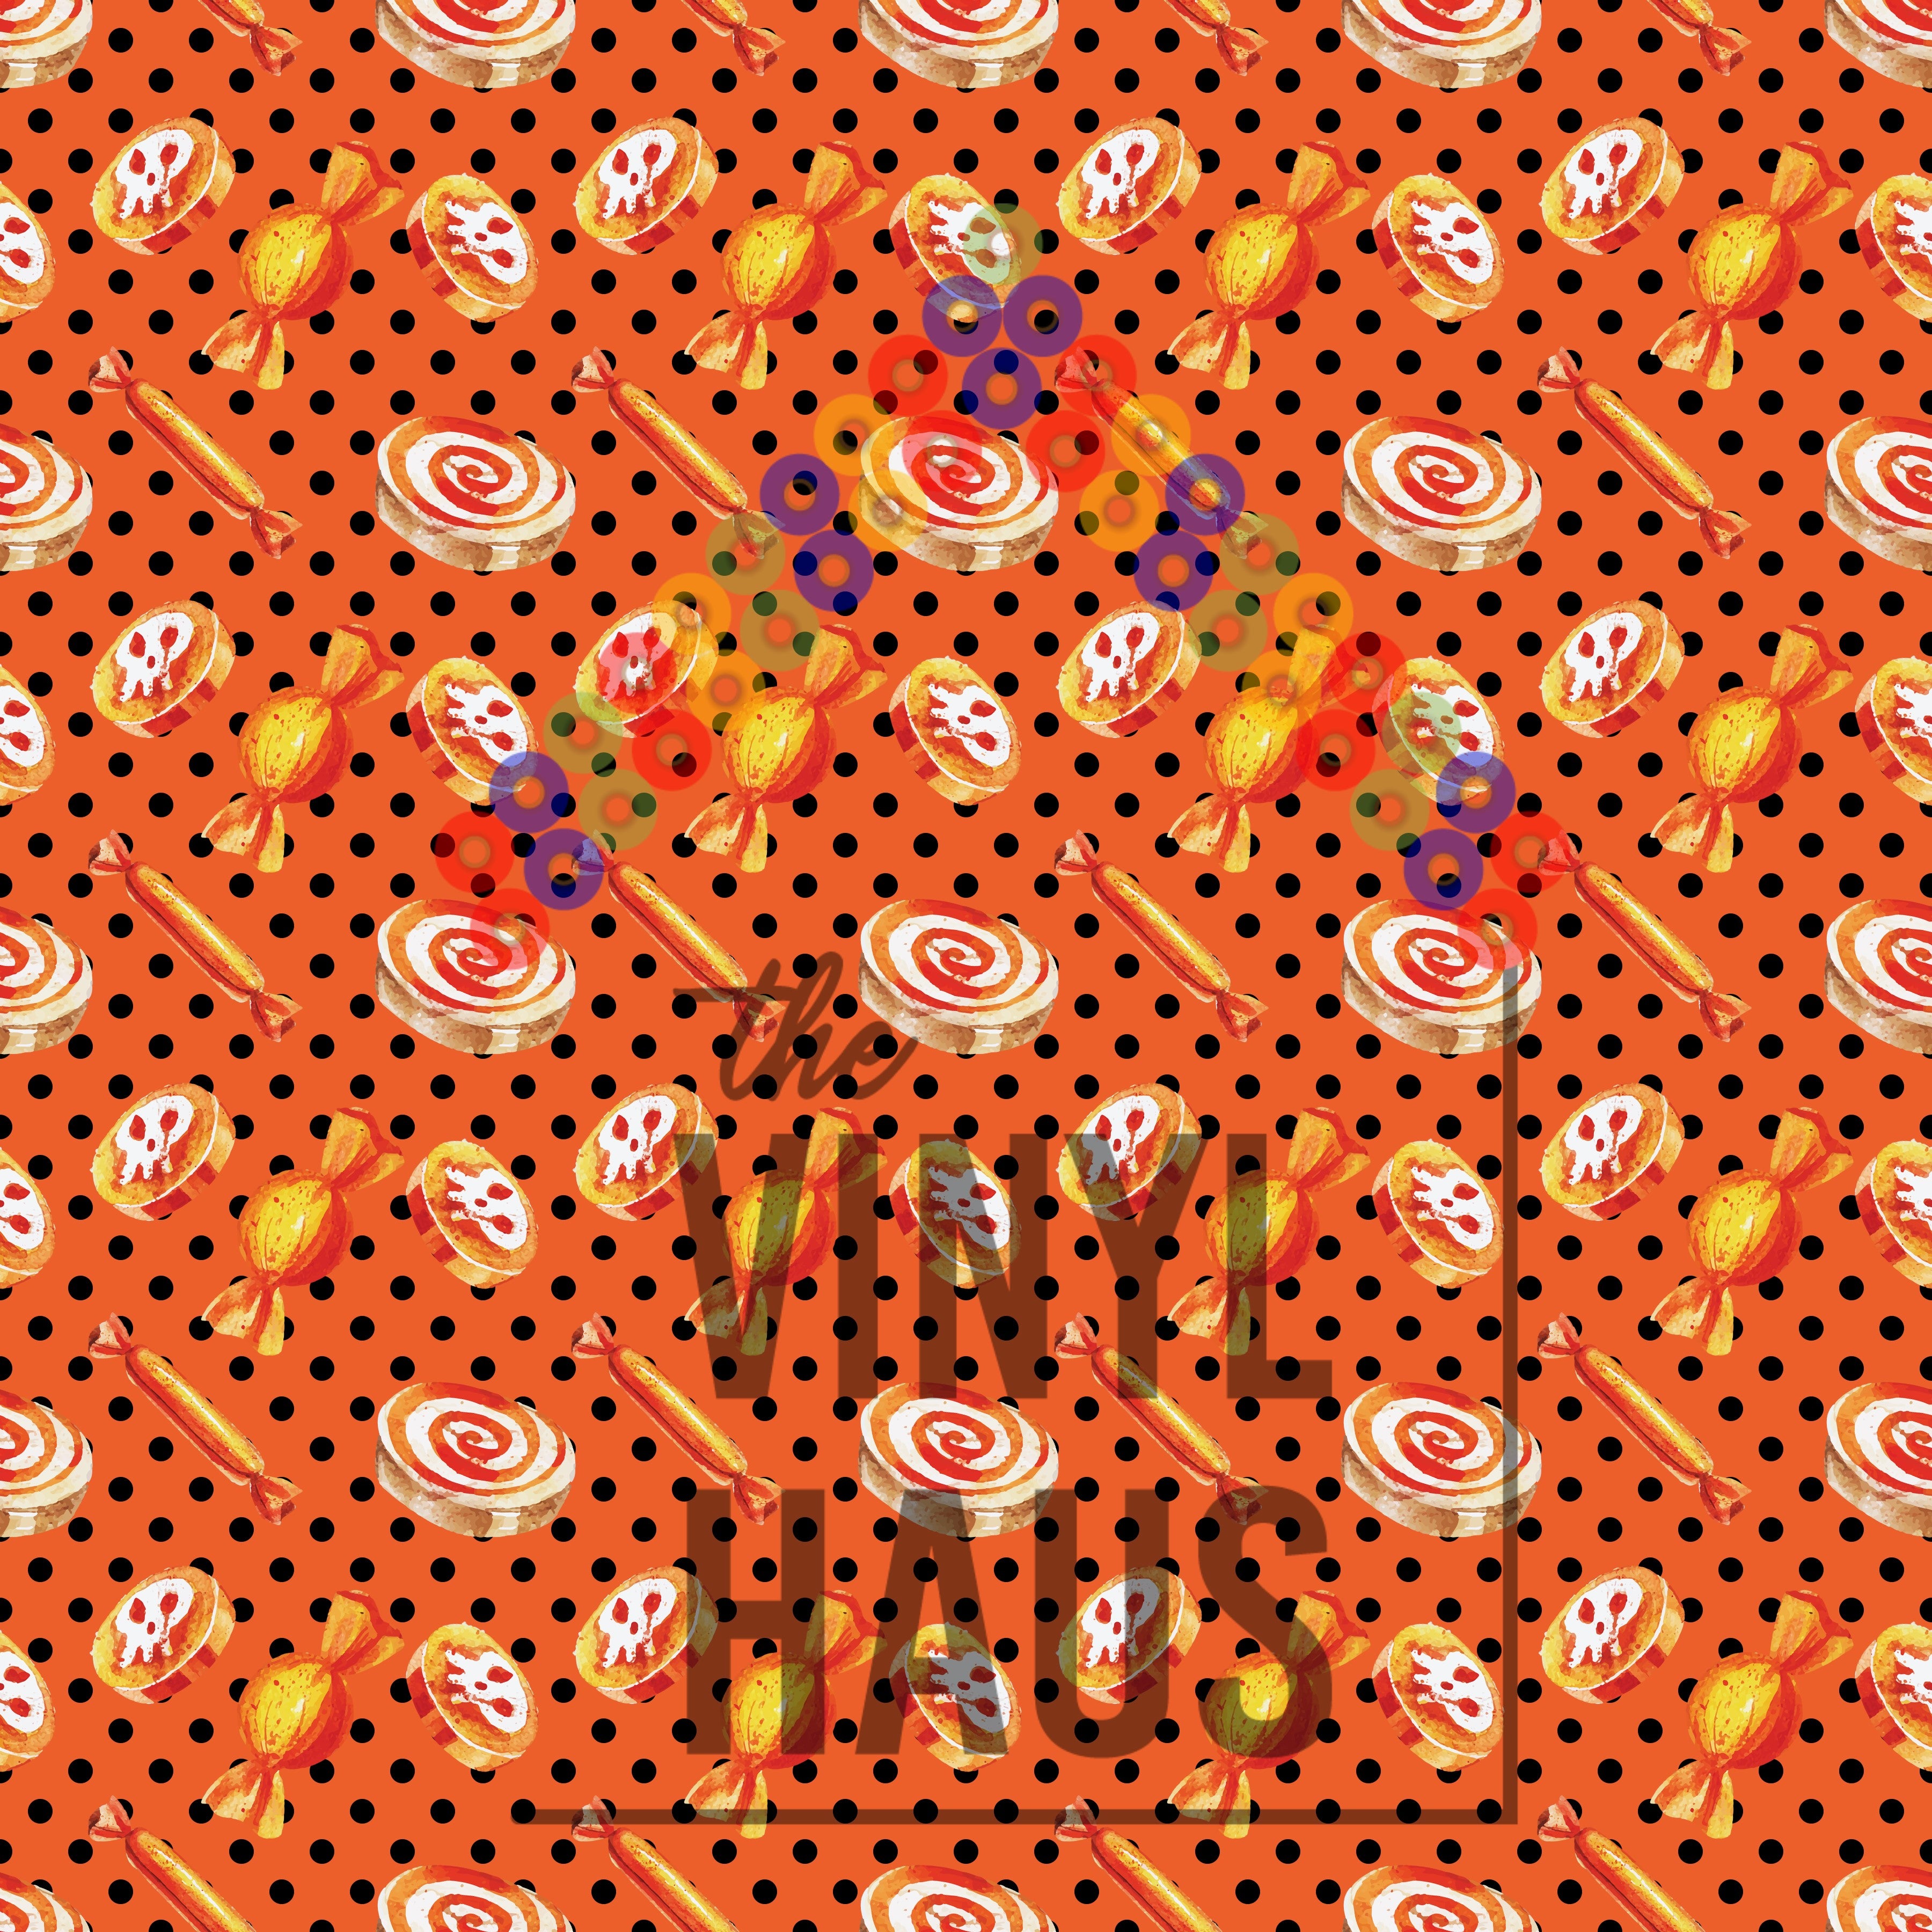 Halloween Candy with Polka Dots Pattern Vinyl 12" x 12" - The Vinyl Haus